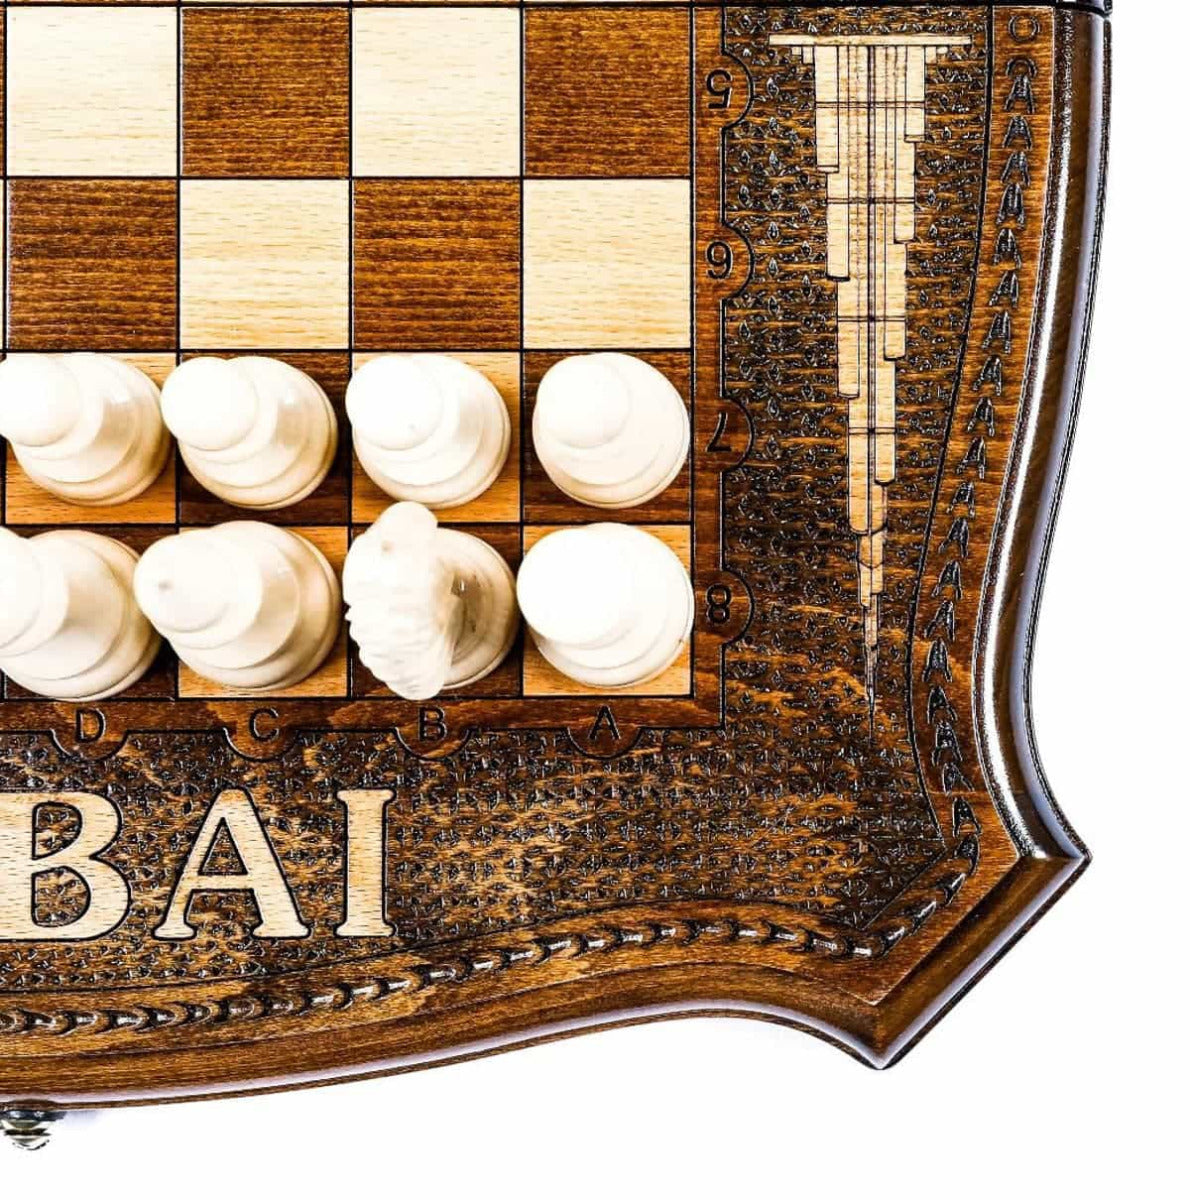 Hand Carved Premium Chess / Backgammon Dubai #AI31359